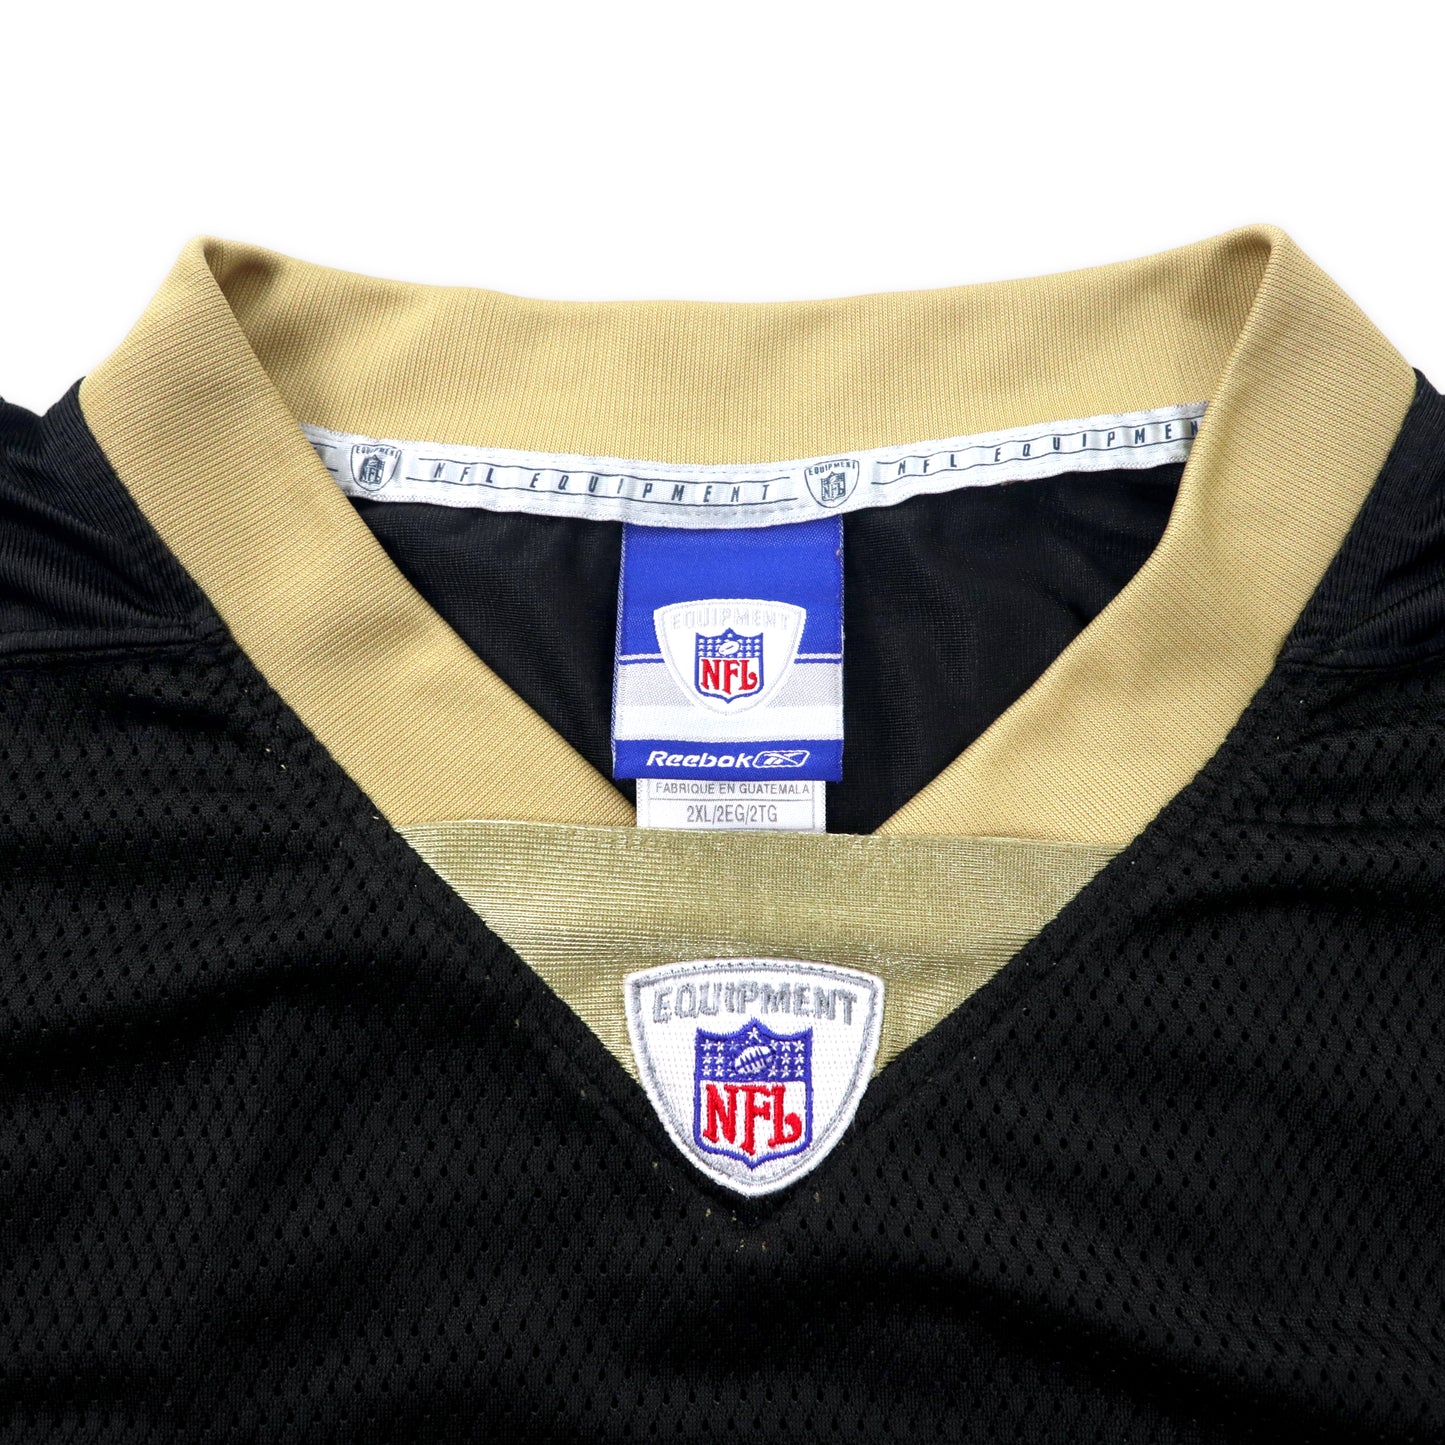 Reebok NFL ゲームシャツ 2XL ブラック ナイロン メッシュ New Orleans Saints BUSH ナンバリング ビッグサイズ